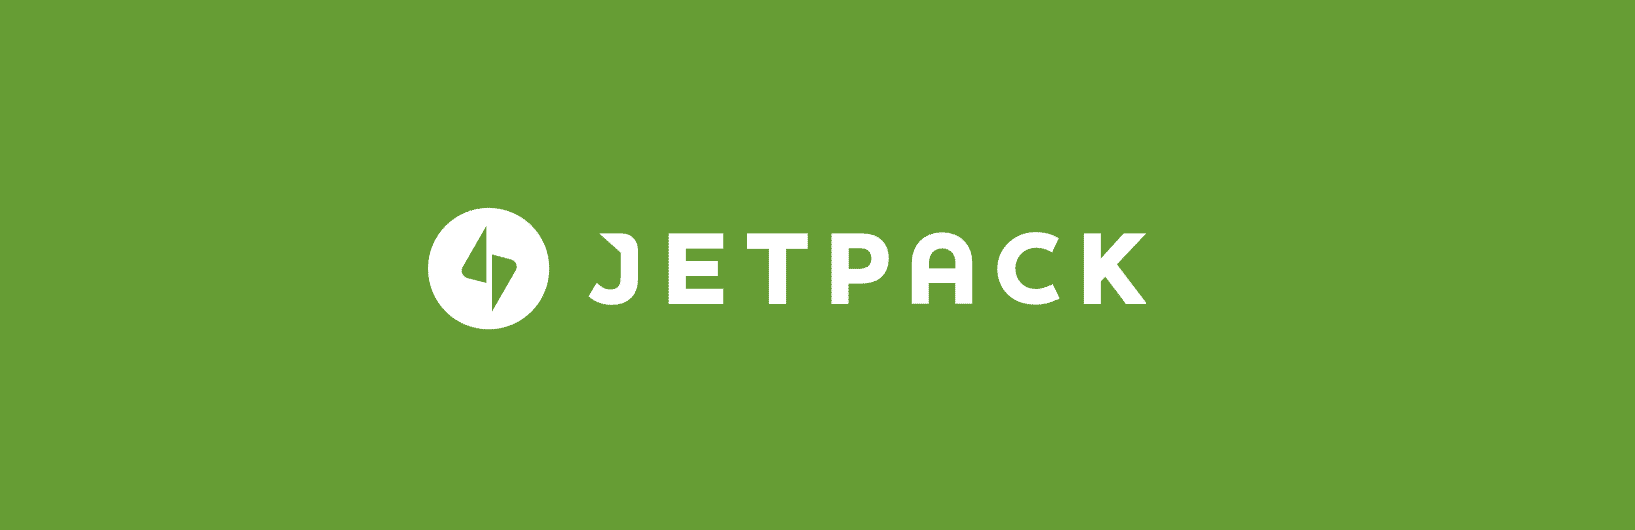 jetpack plugin